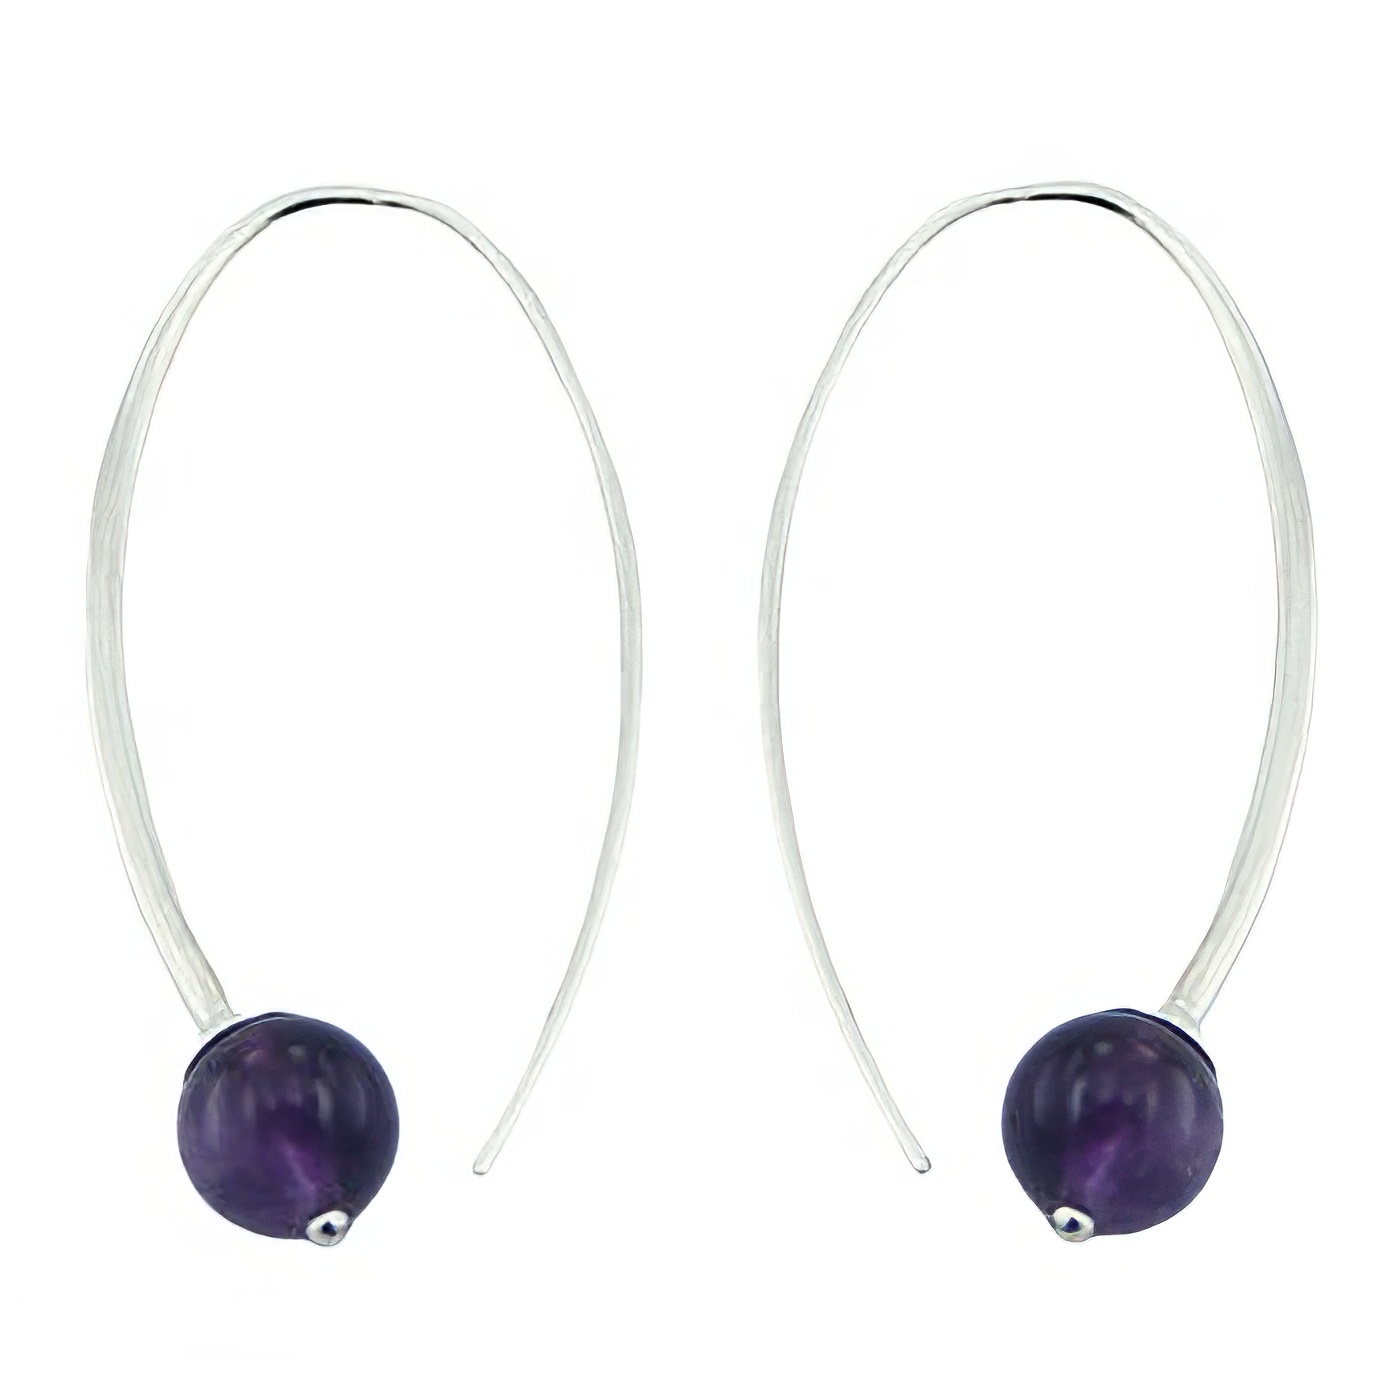 Violet amethyst sterling silver fixed hooks beads earrings by BeYindi 